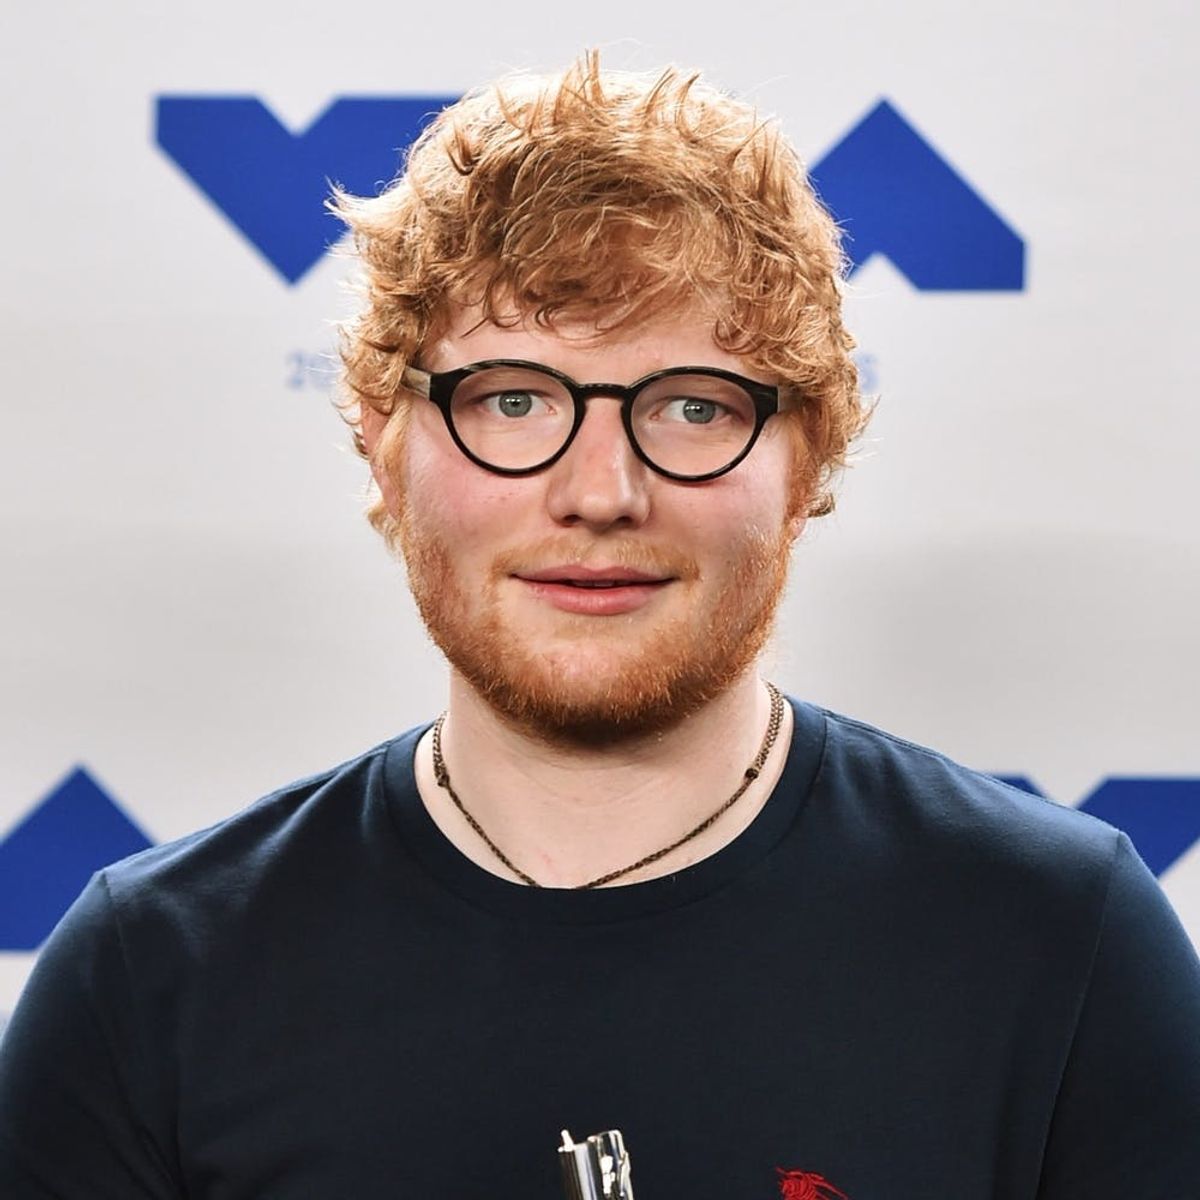 Ed Sheeran Reveals He Secretly Battled Substance Abuse